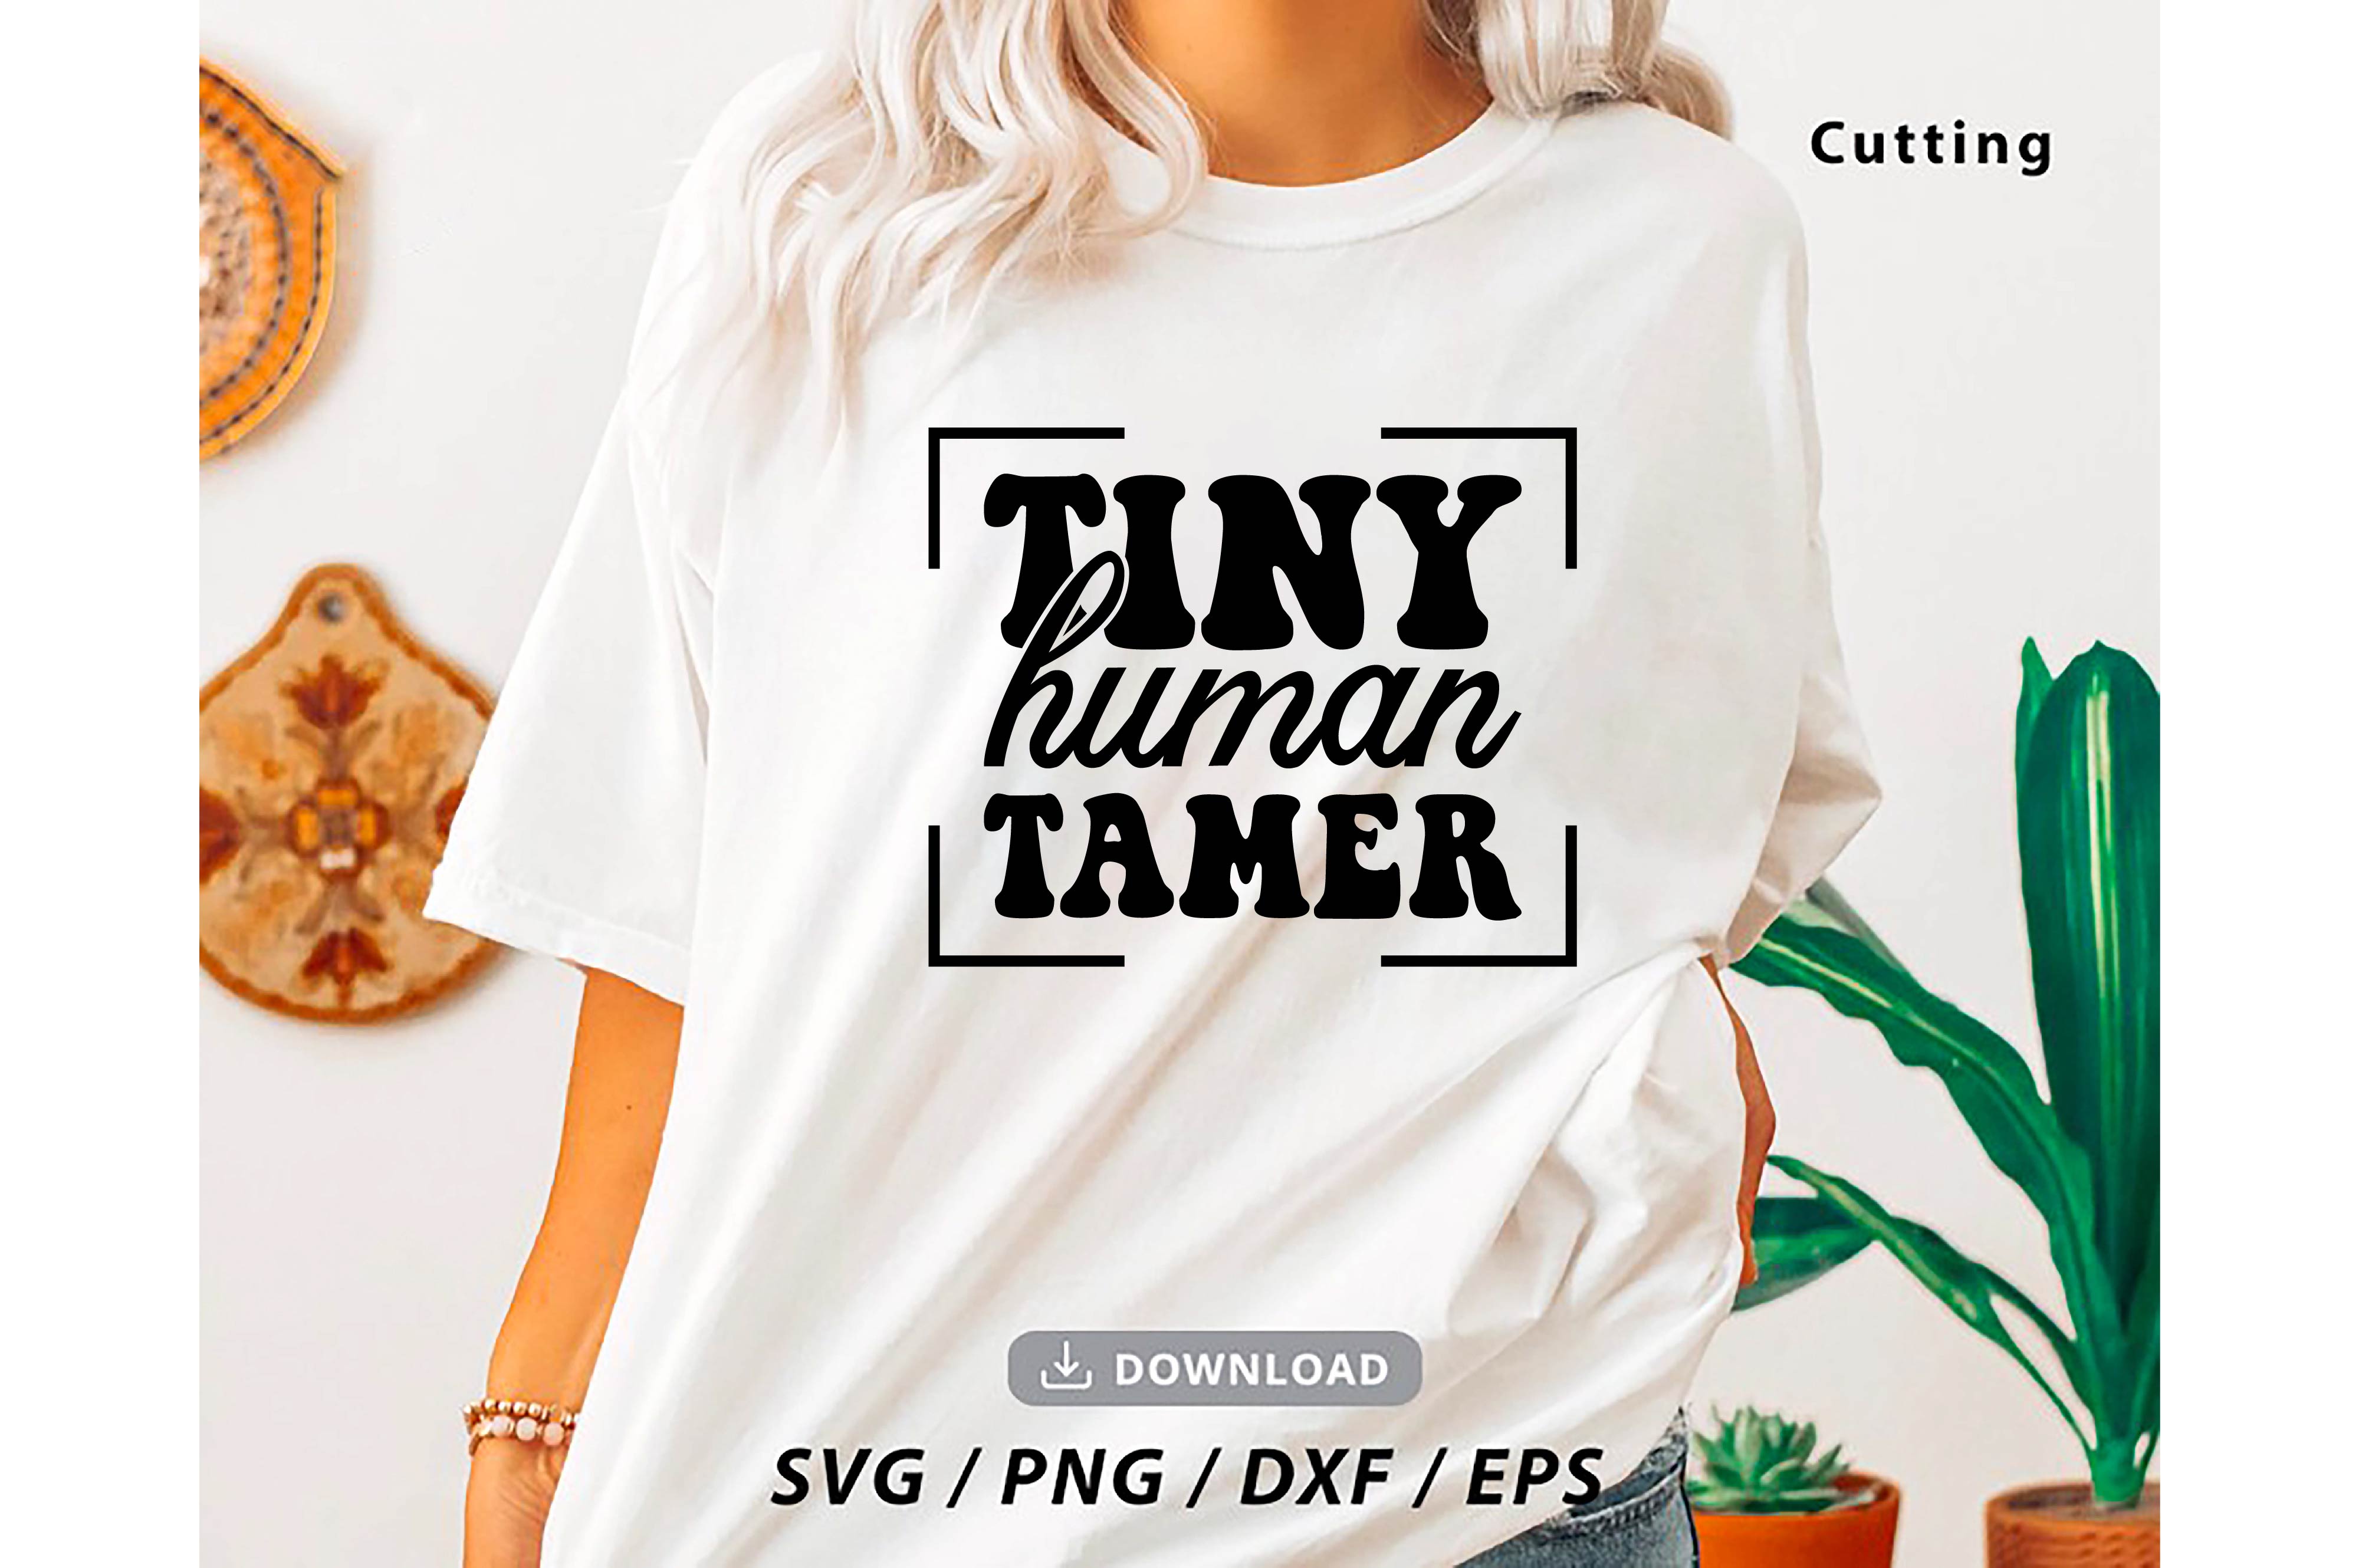 Woman wearing a t - shirt that says tiny human tamer.